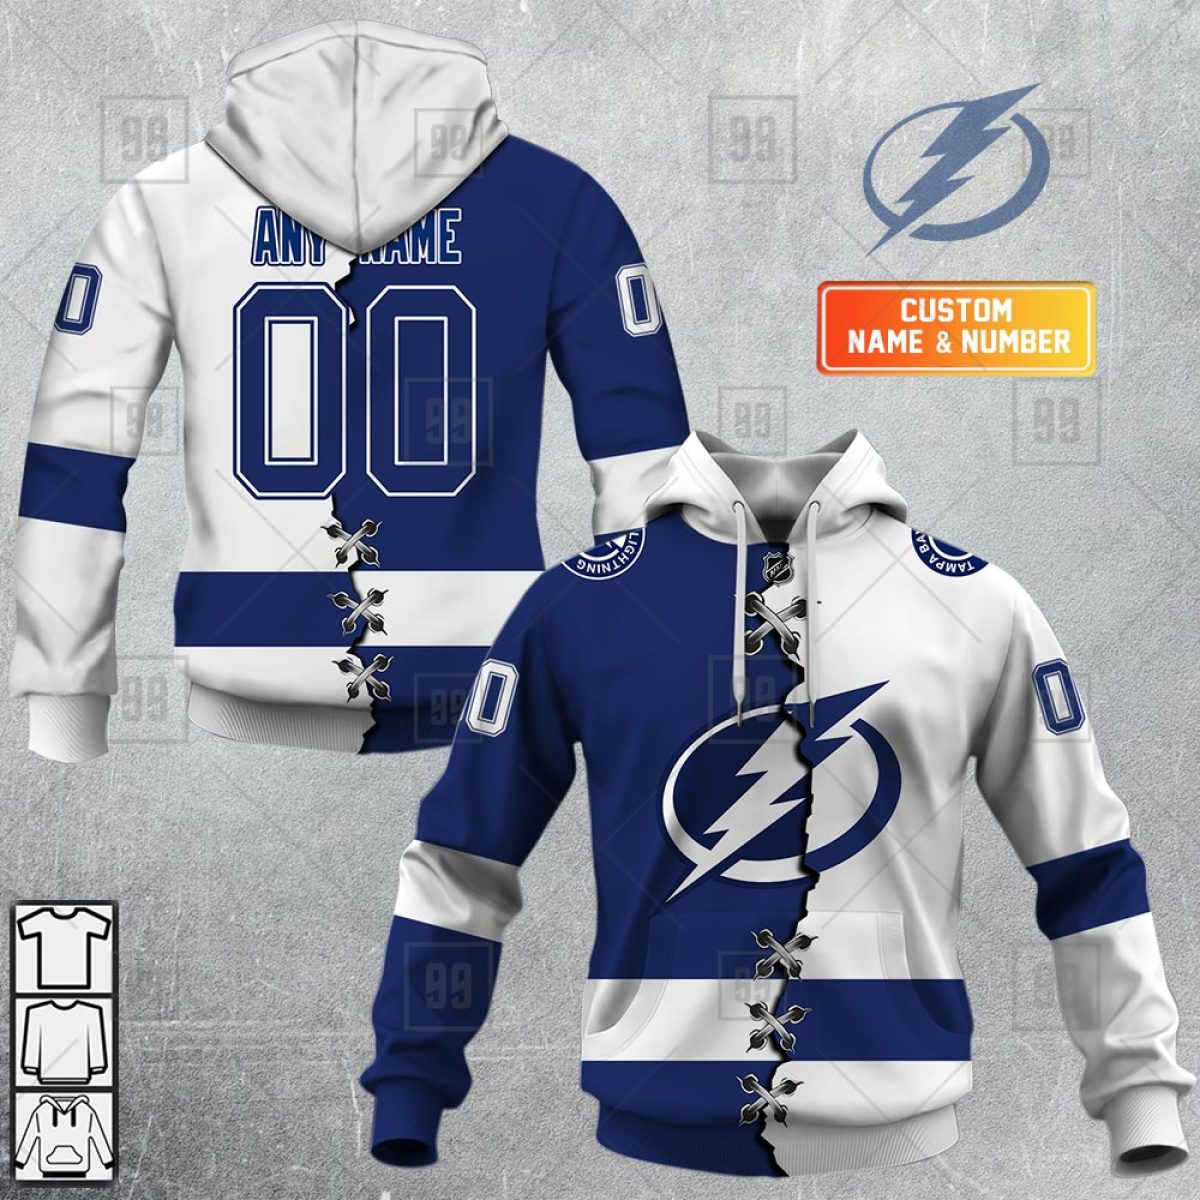 Tampa Bay Lightning NHL Special Jersey For Halloween Night Hoodie T Shirt -  Growkoc